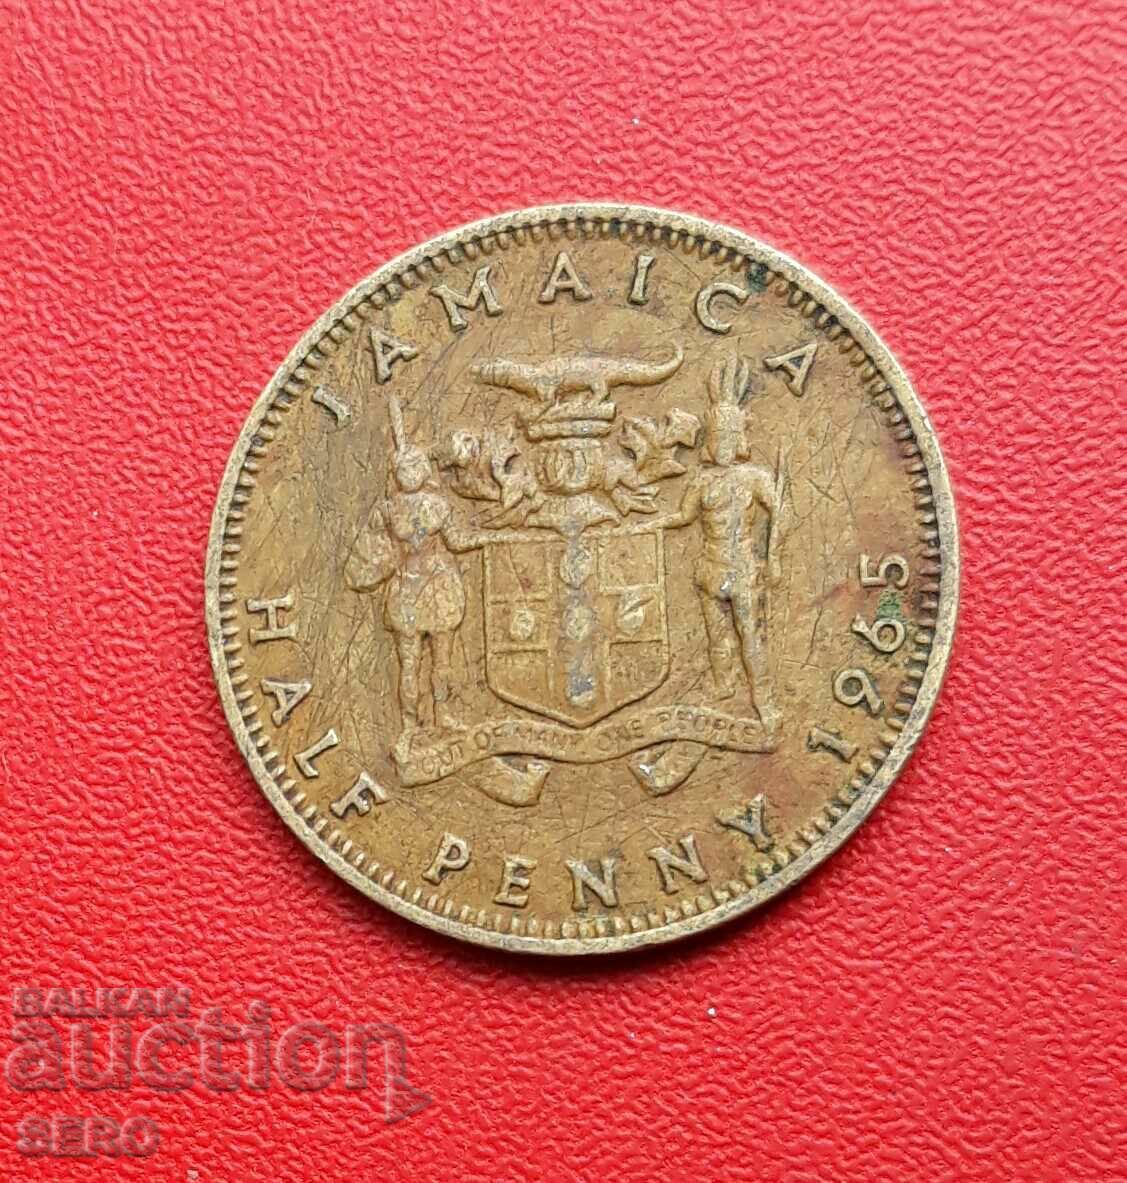 Island of Jamaica - 1/2 penny 1965